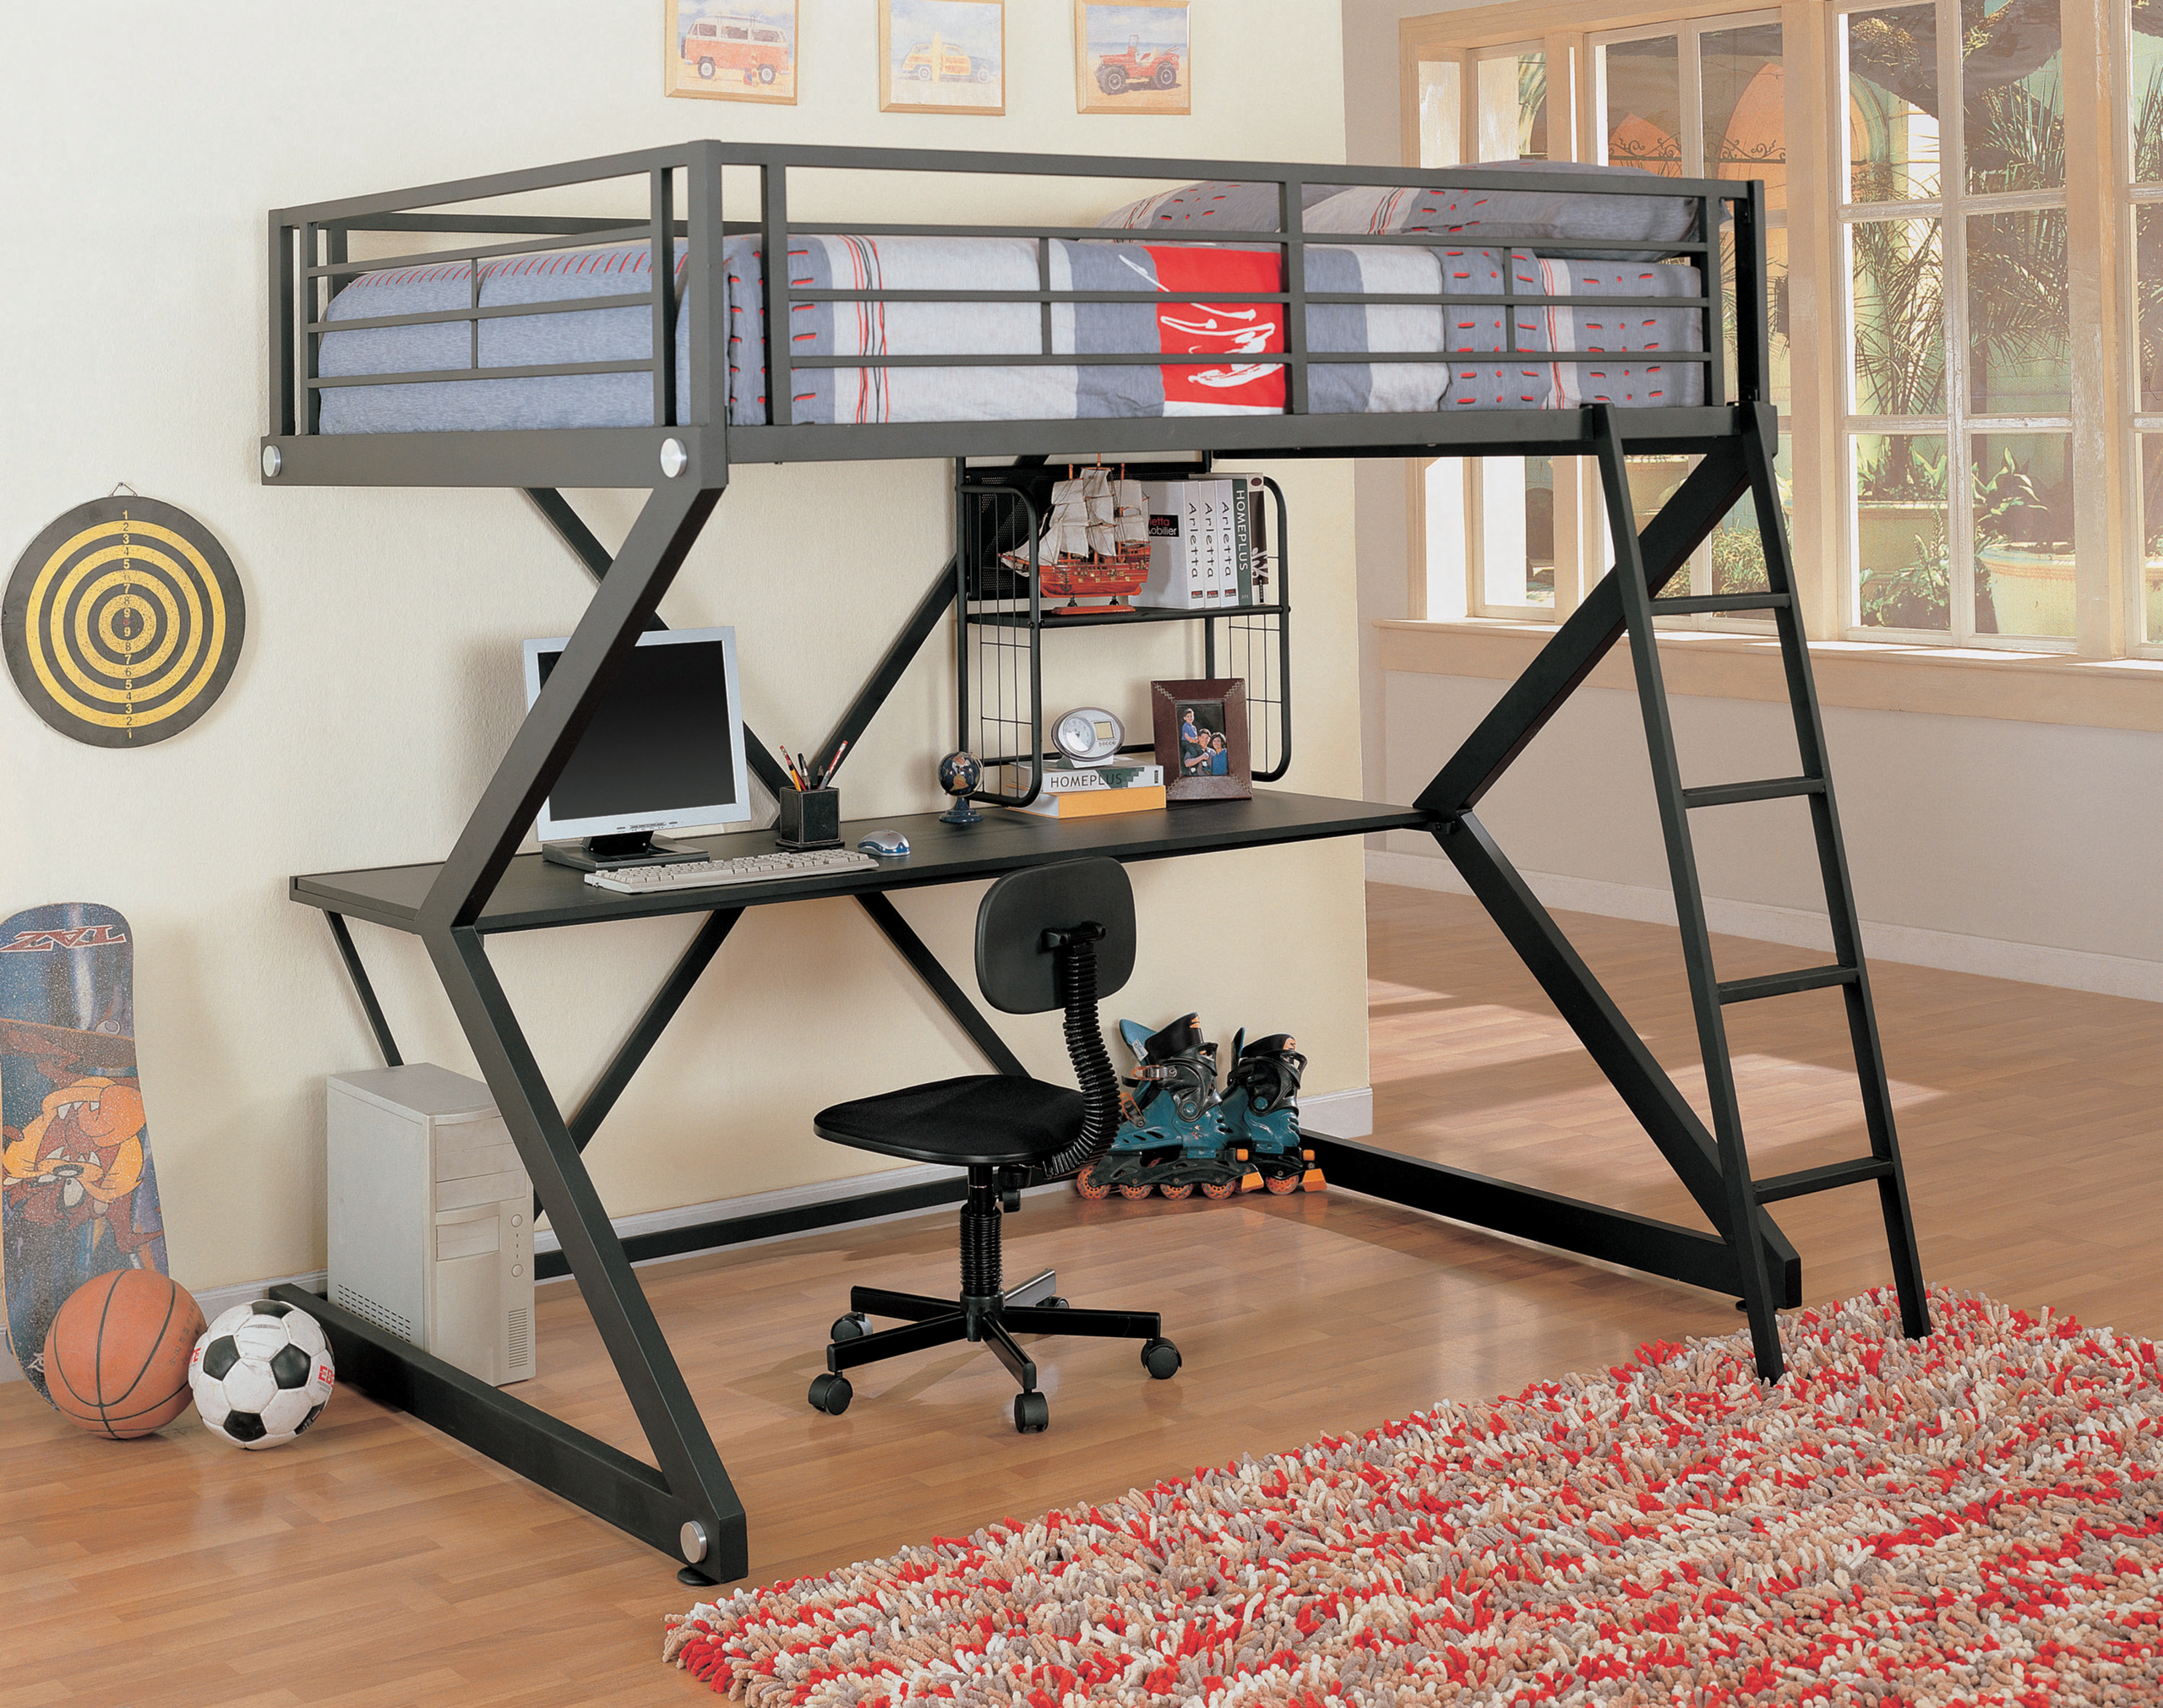 Full Size Loft Bed With Desk Visualhunt, Loft Beds With Desks Under Them